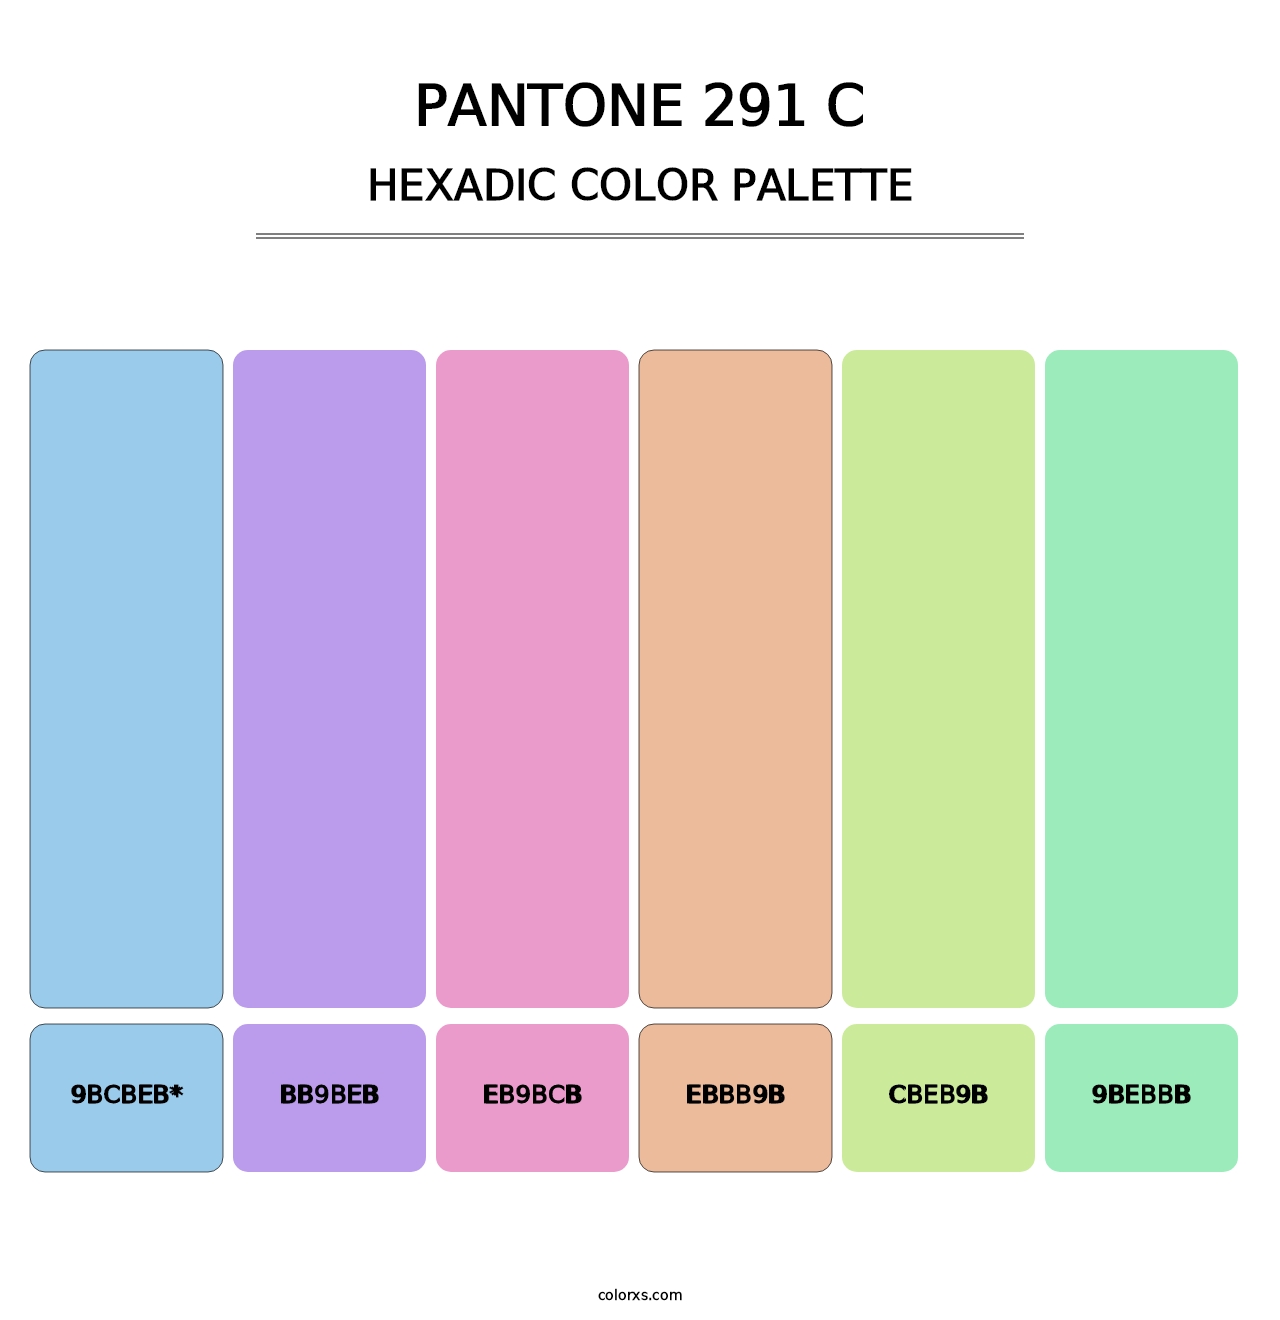 PANTONE 291 C - Hexadic Color Palette